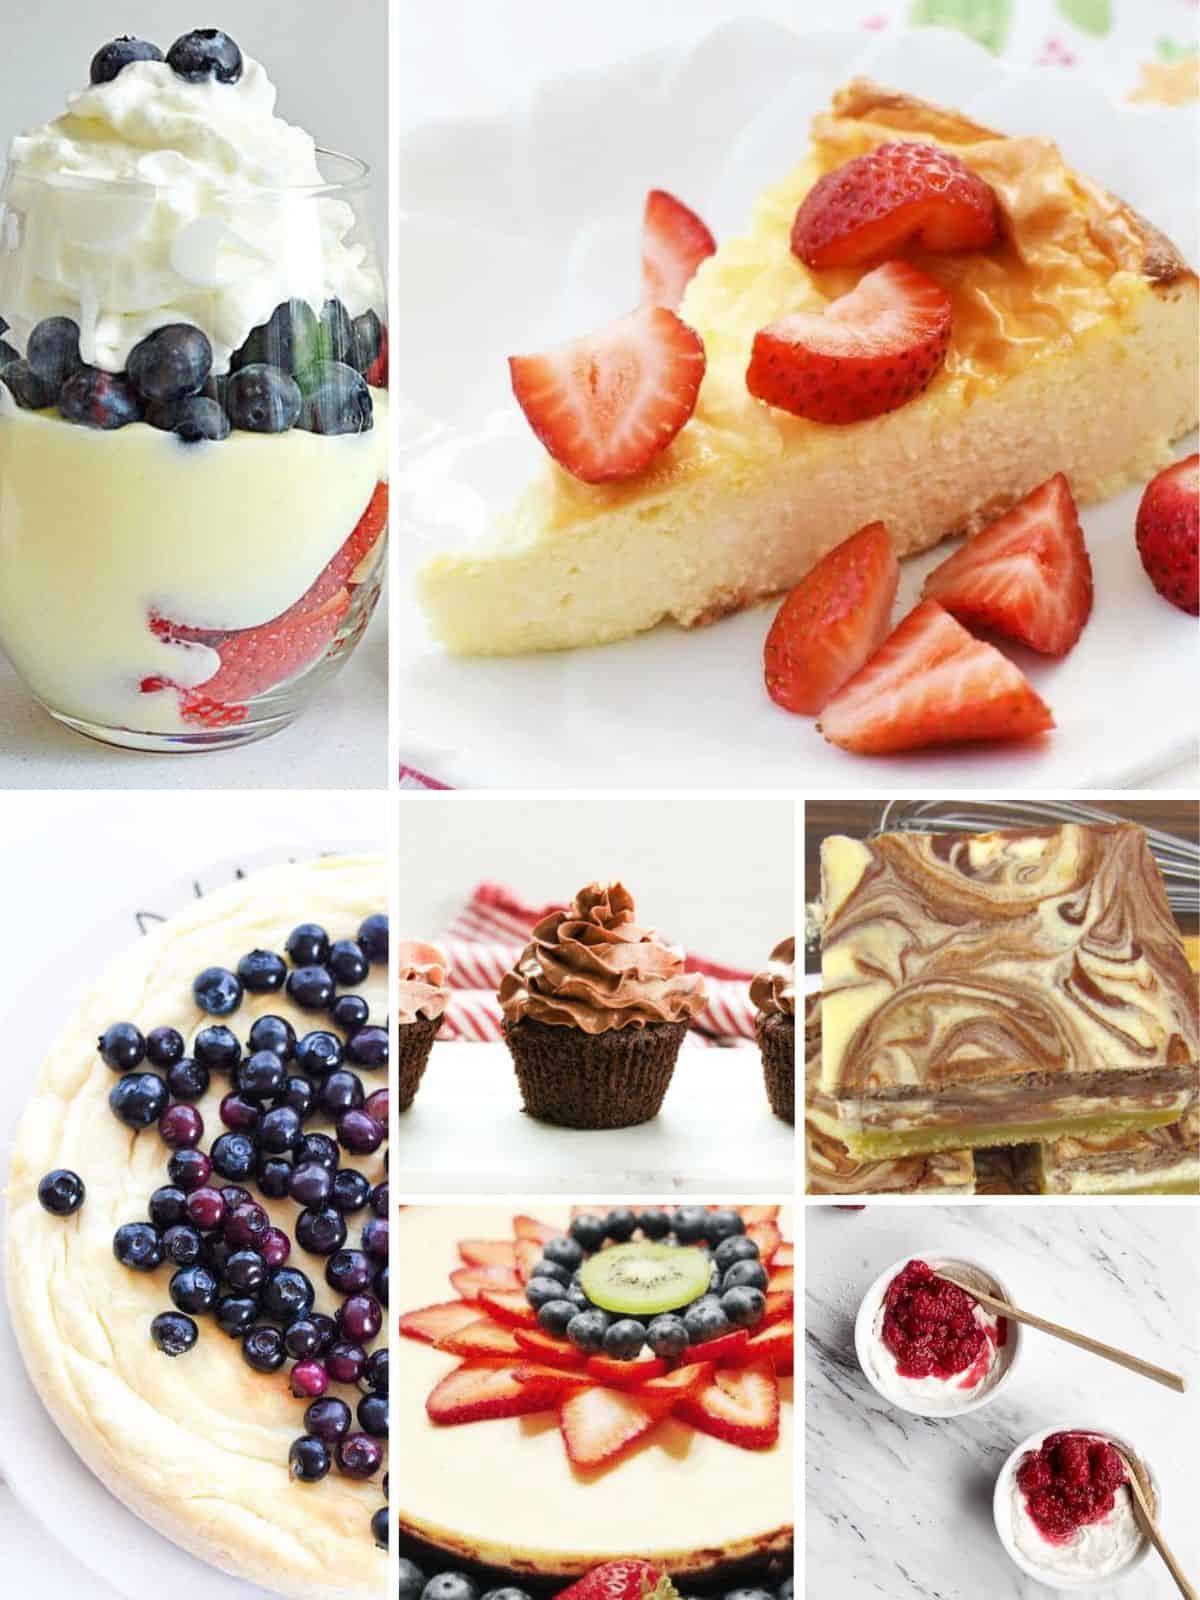 Top 35 Sugar-Free Dessert Recipes With No Regrets - Recipes.net